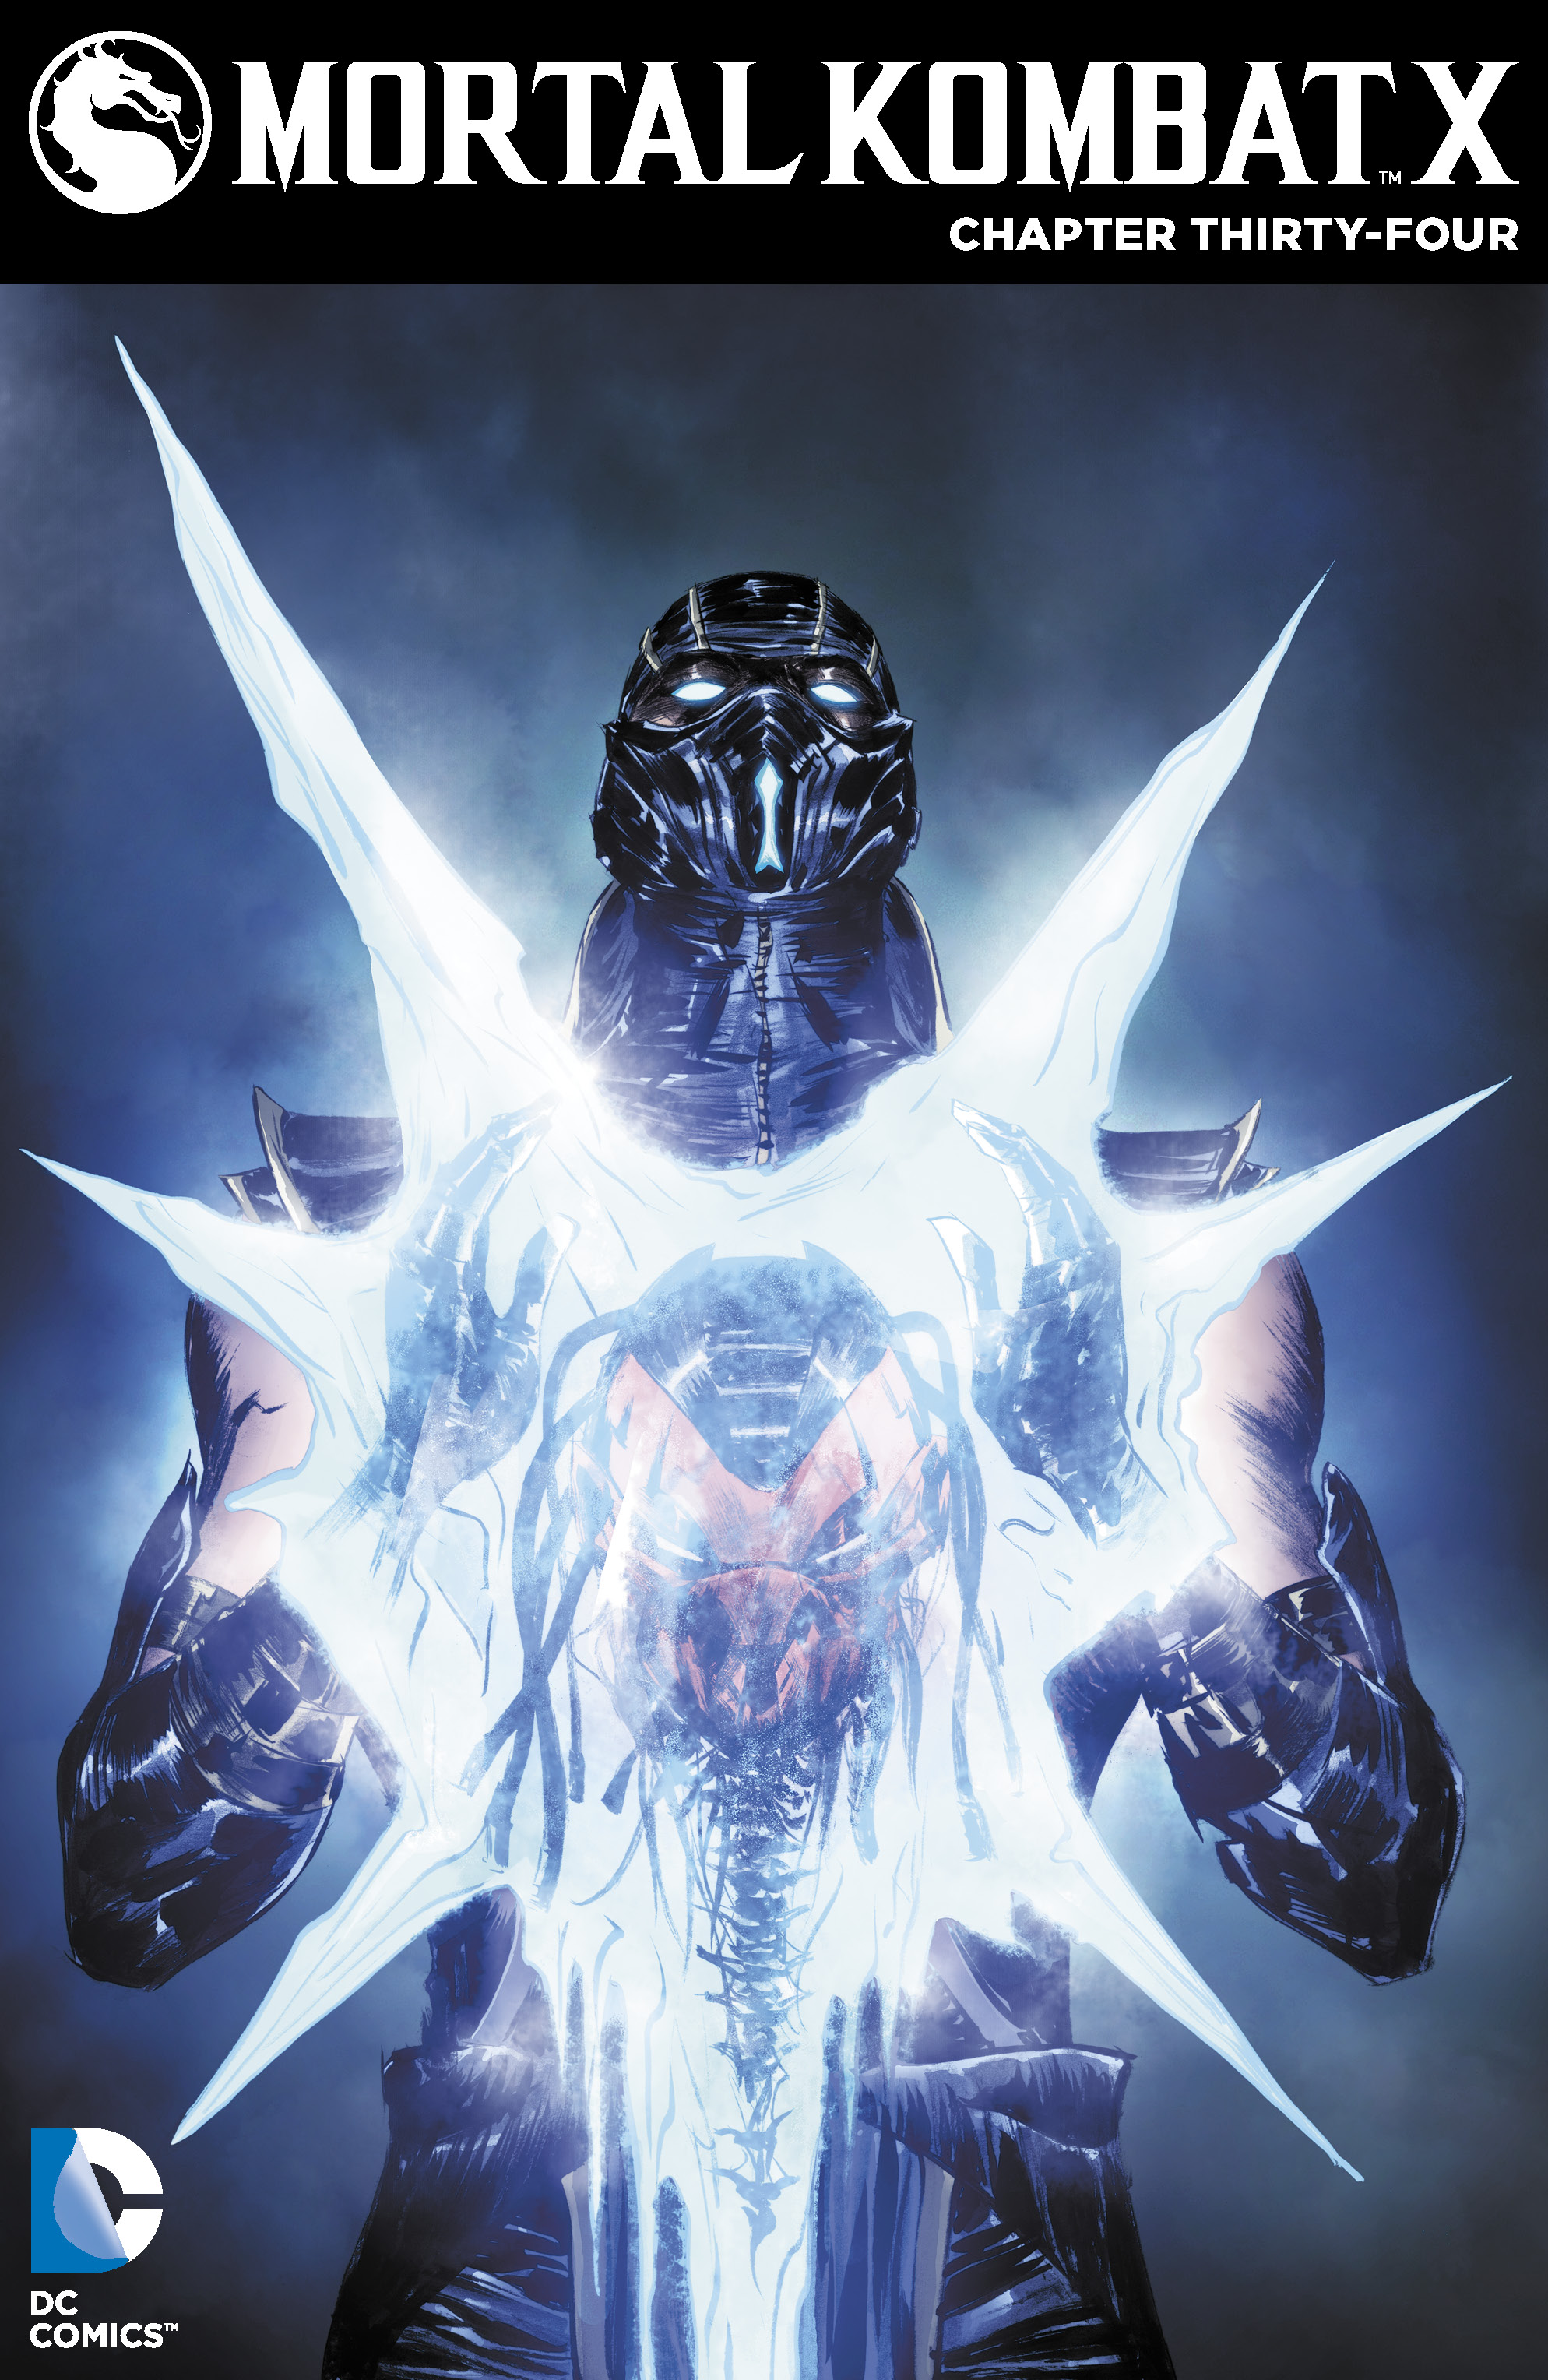 Mortal Kombat X #34 preview images